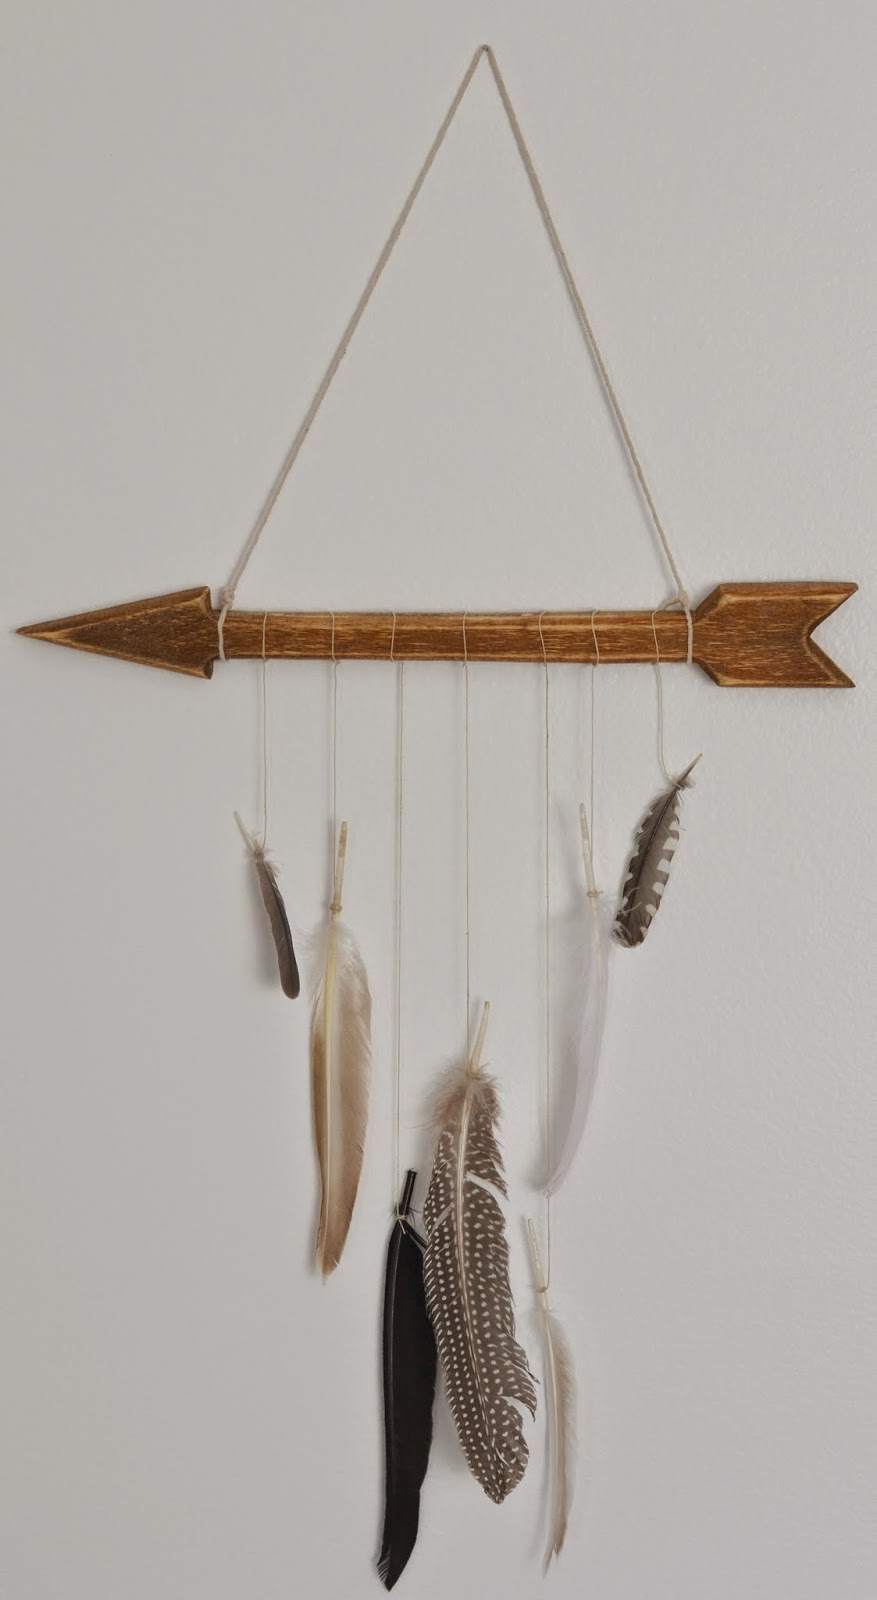 Arrows, Feathers and Living Room Sneak Peek